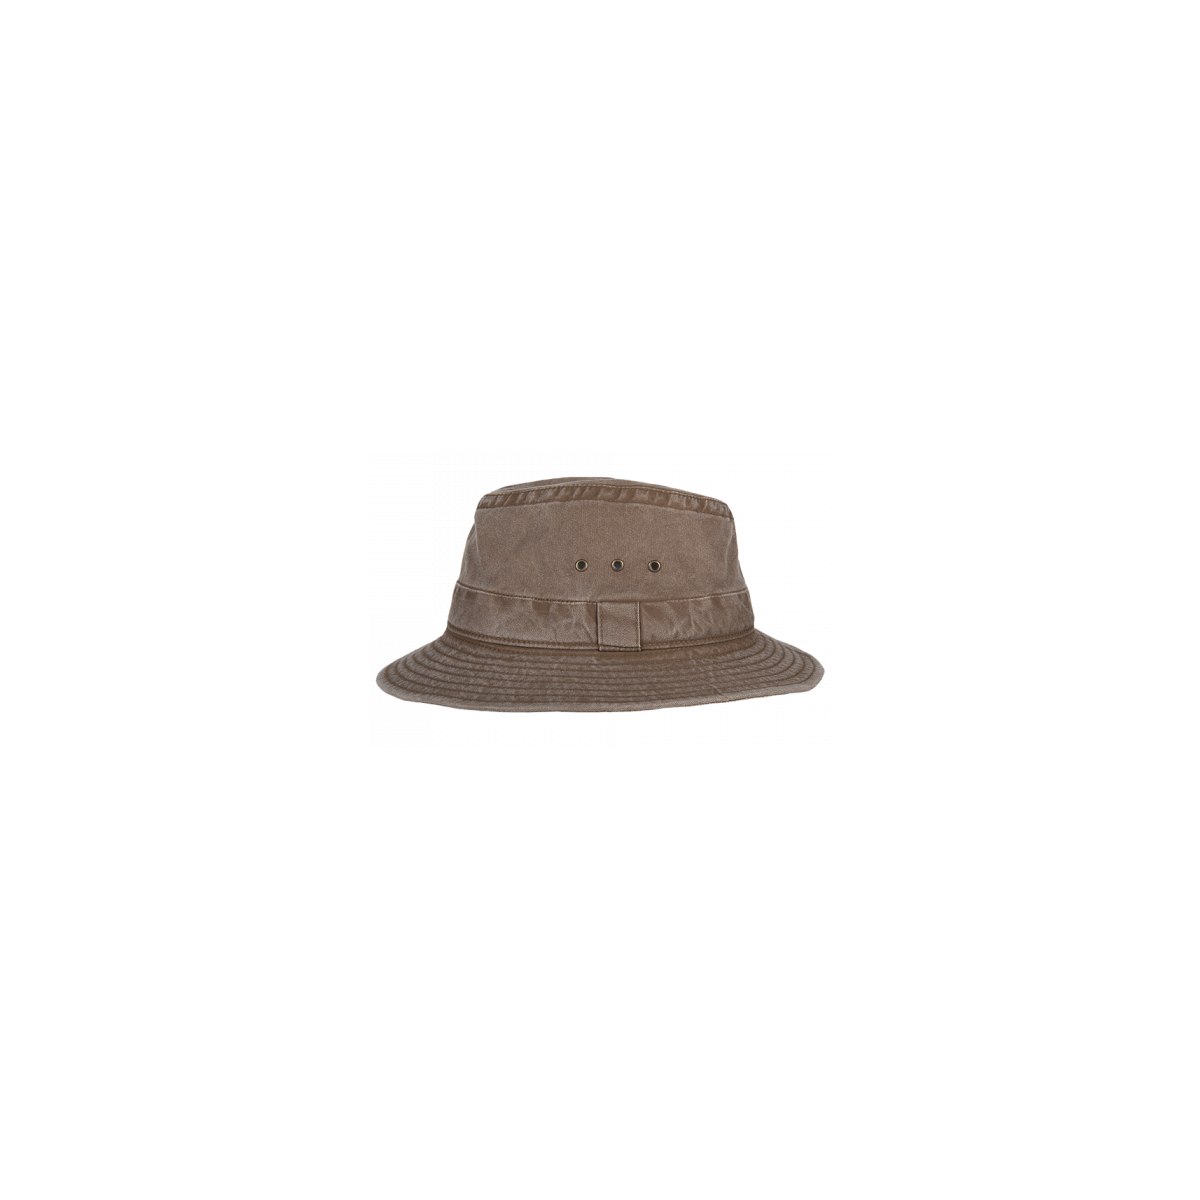 Traveller hat brown cotton hatland - buy brown hat Reference : 8143 ...